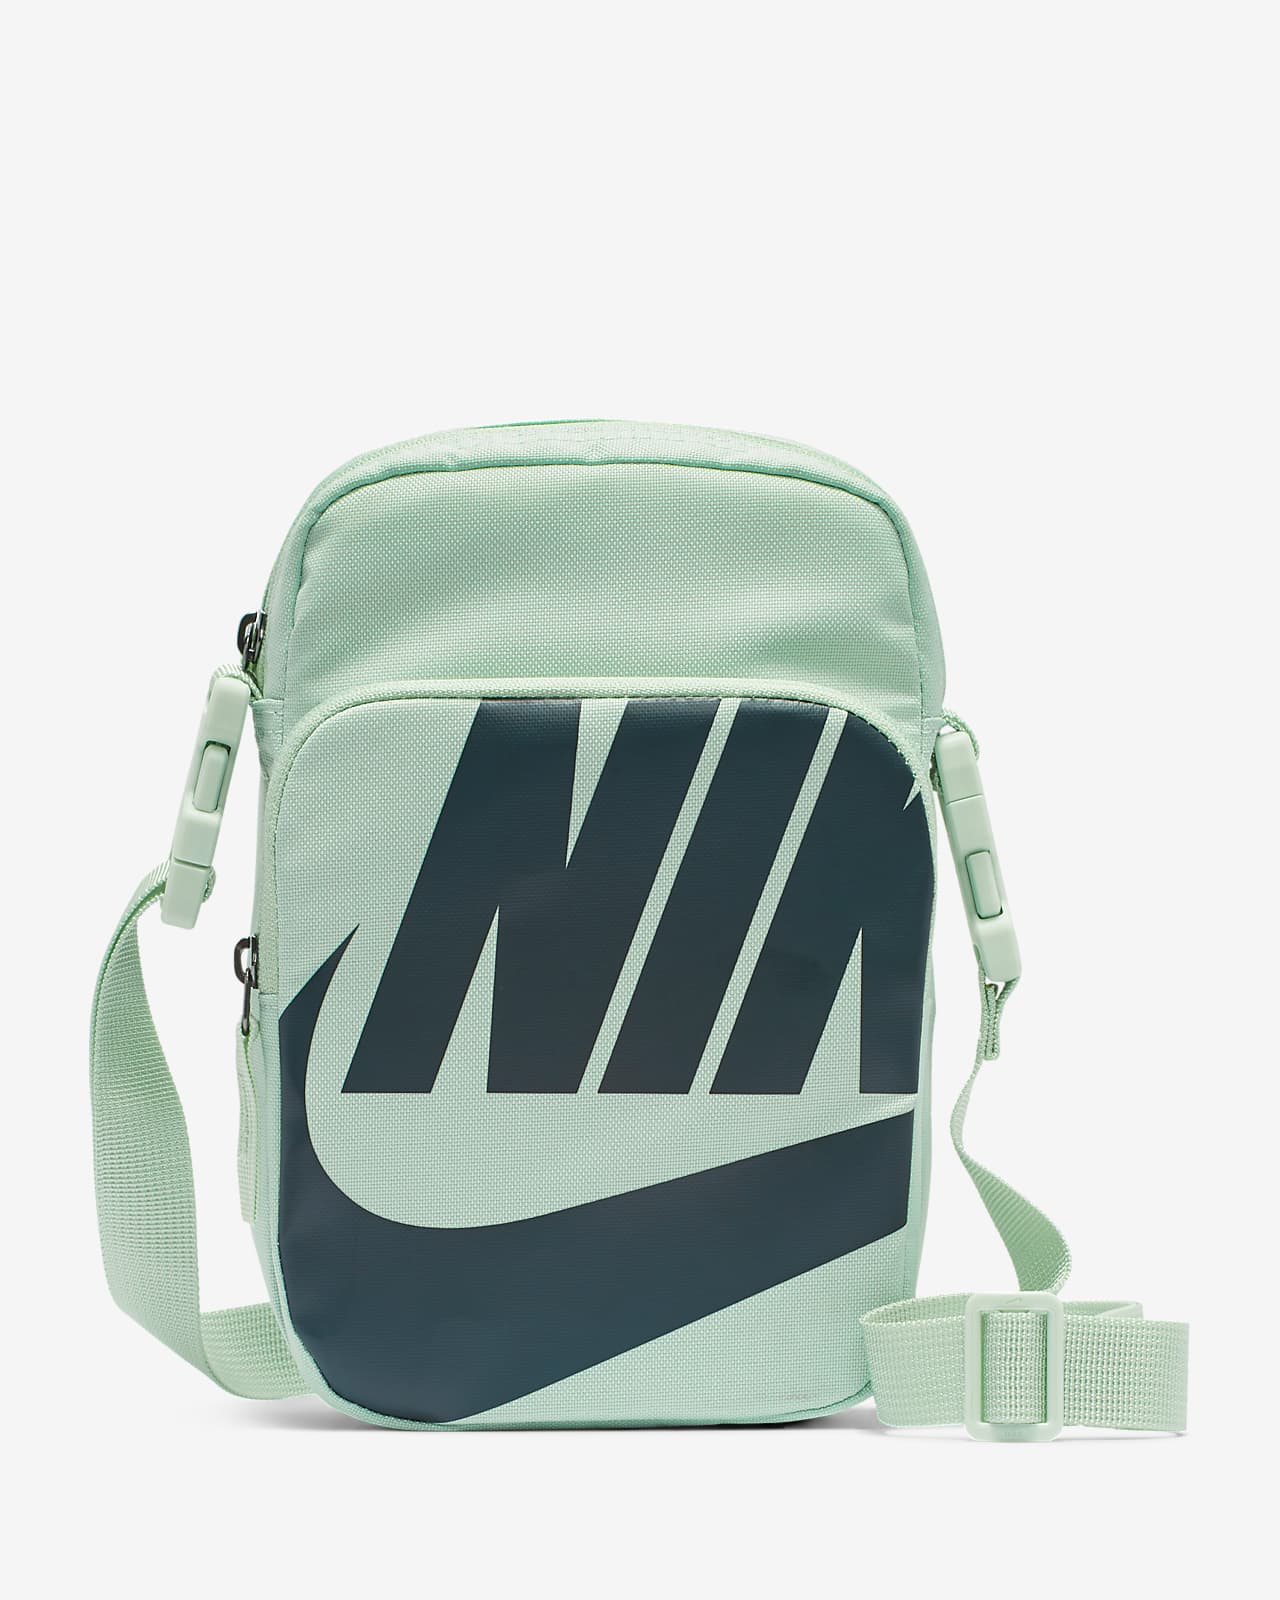 Nike Heritage 2.0 Bag. 0